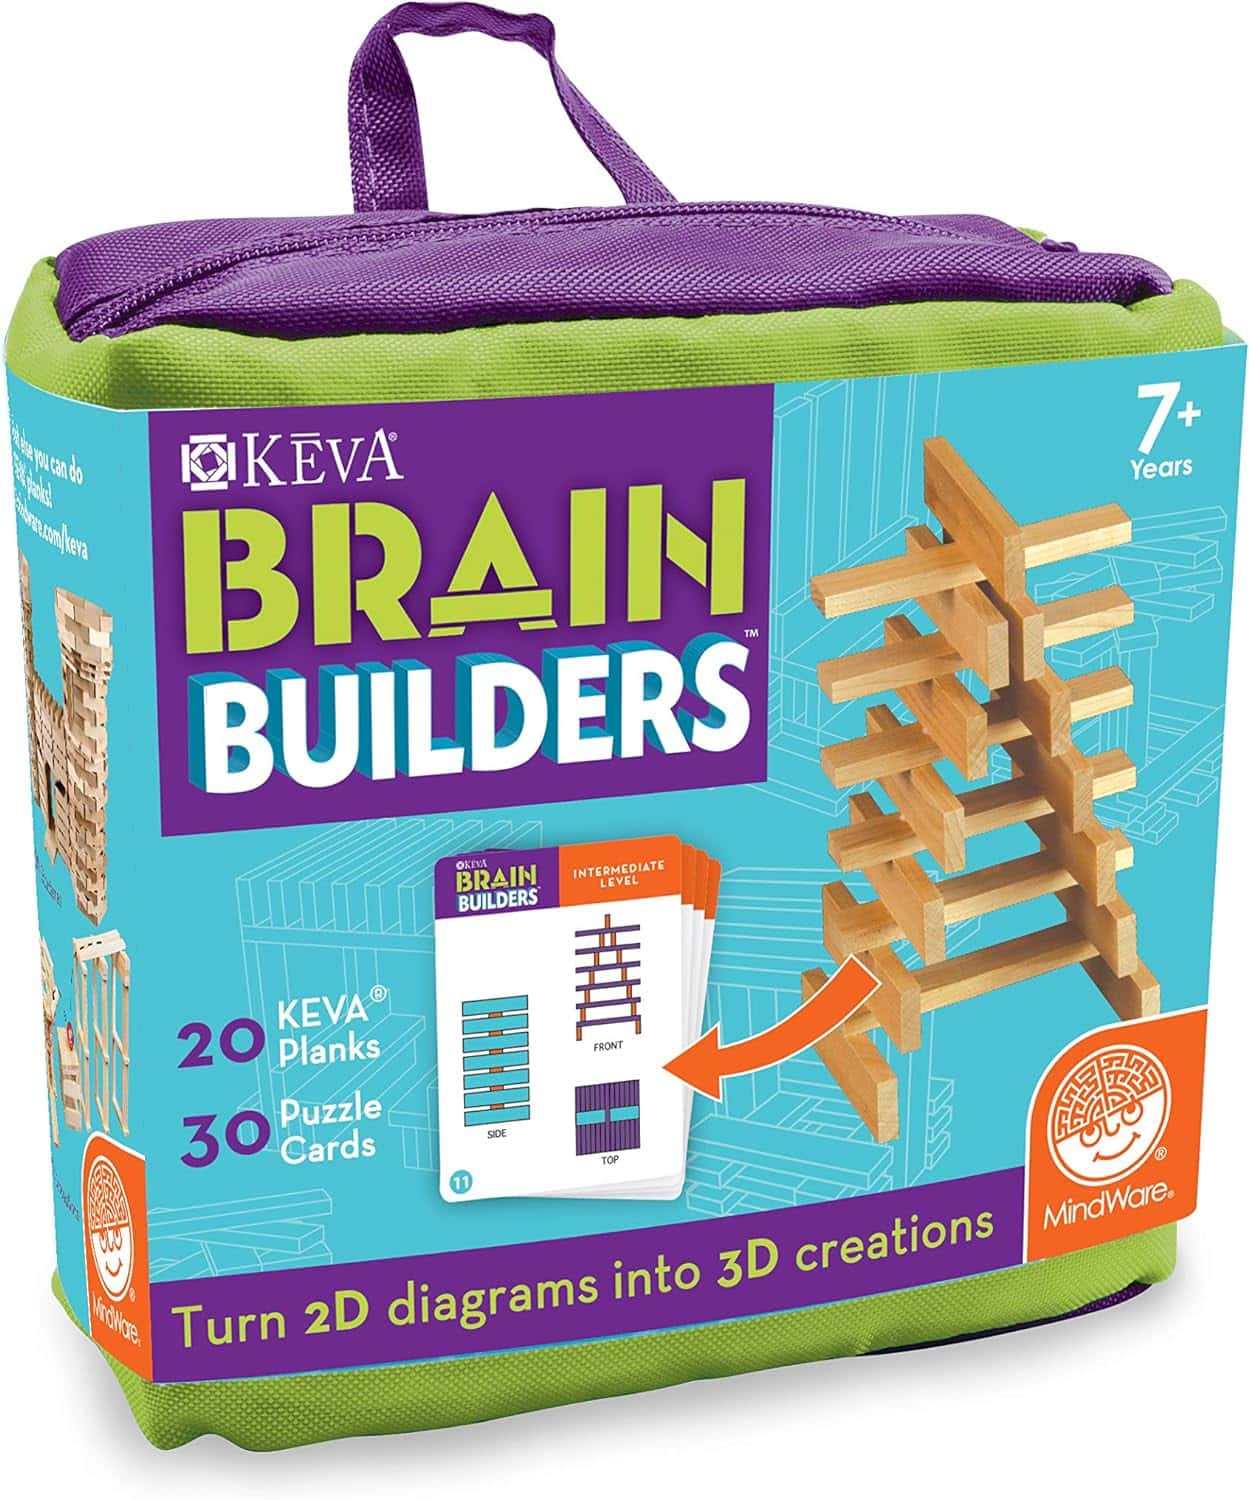 MindWare KEVA Brainbuilders - 3D brain building STEM challenges for boys & girls